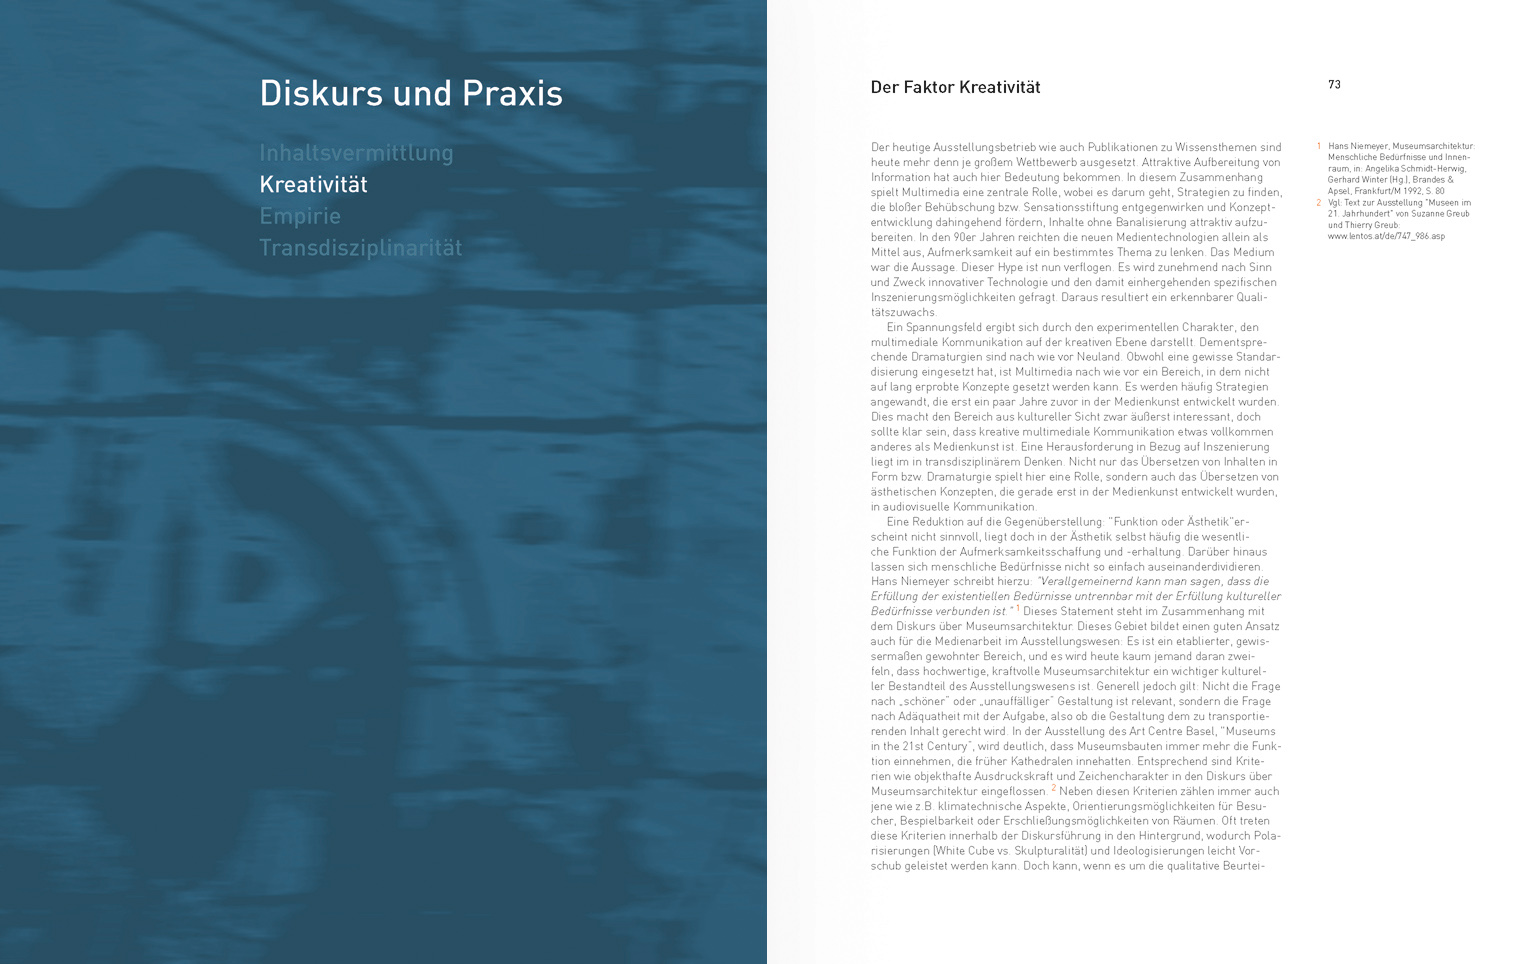 Buch "Science / Culture : Multimedia" – Titelseite Kapitel "Diskurs und Praxis"